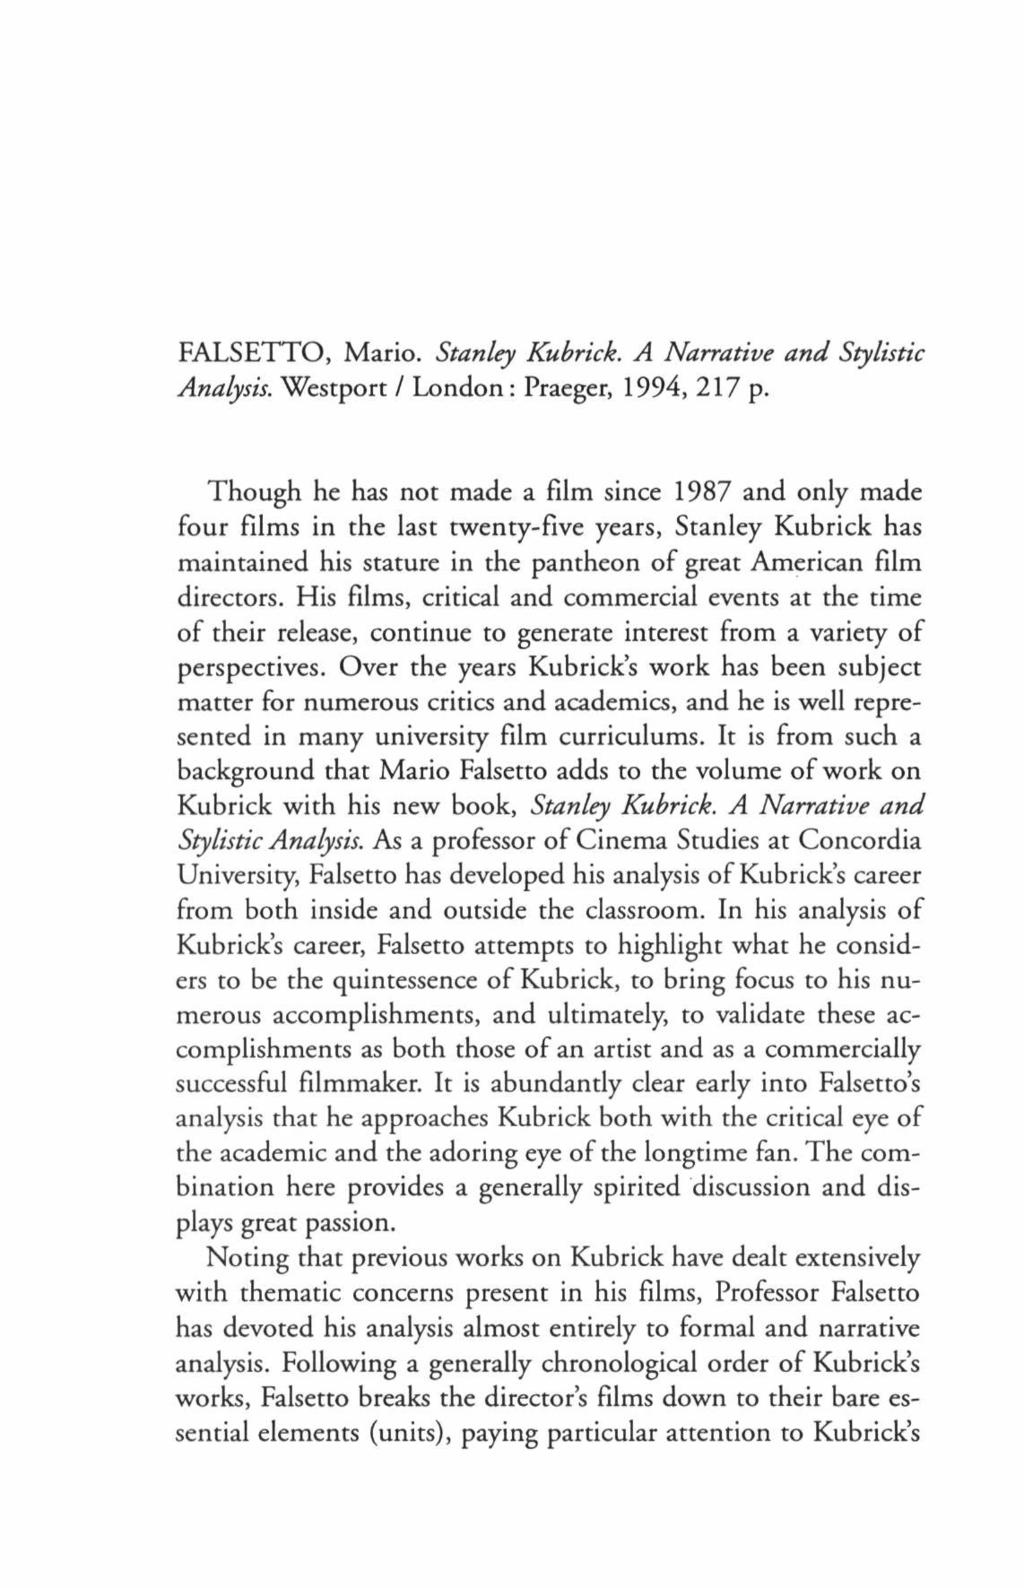 FALSETTO, Mario. Stanley Kubrick. A Narrative and Stylistic Analysis. Westport / London : Praeger, 1994, 217 p.